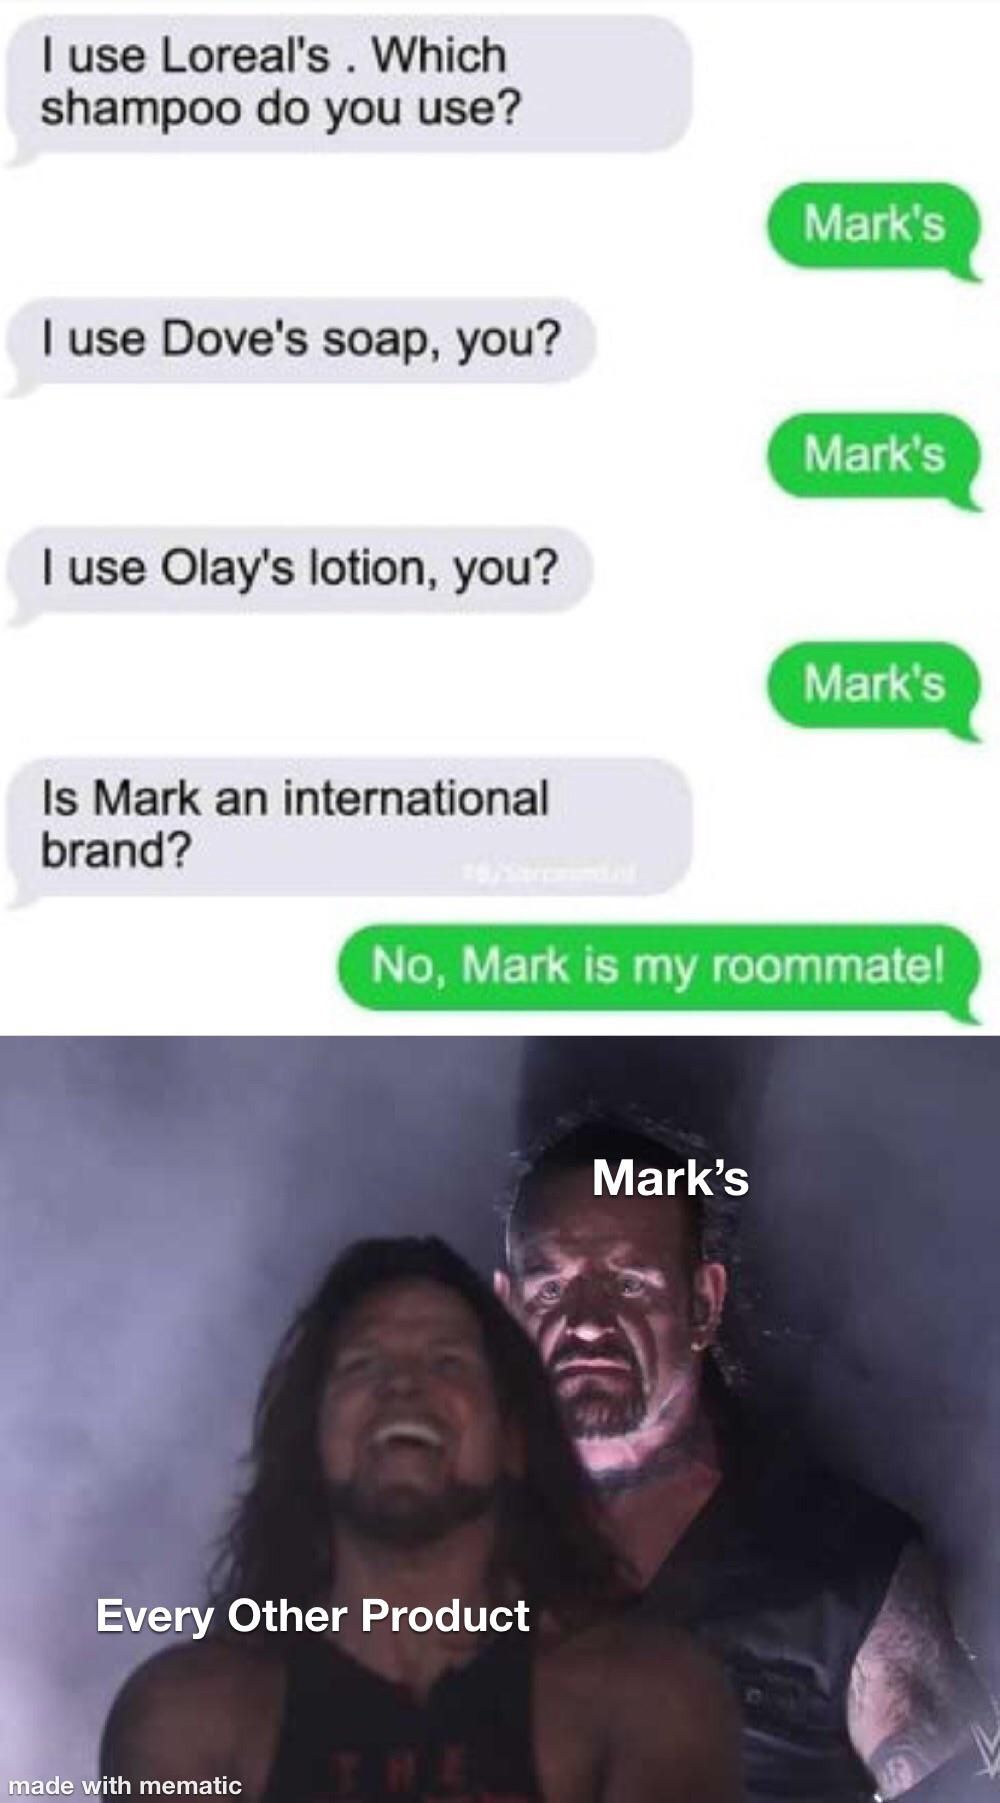 Thanks Mark